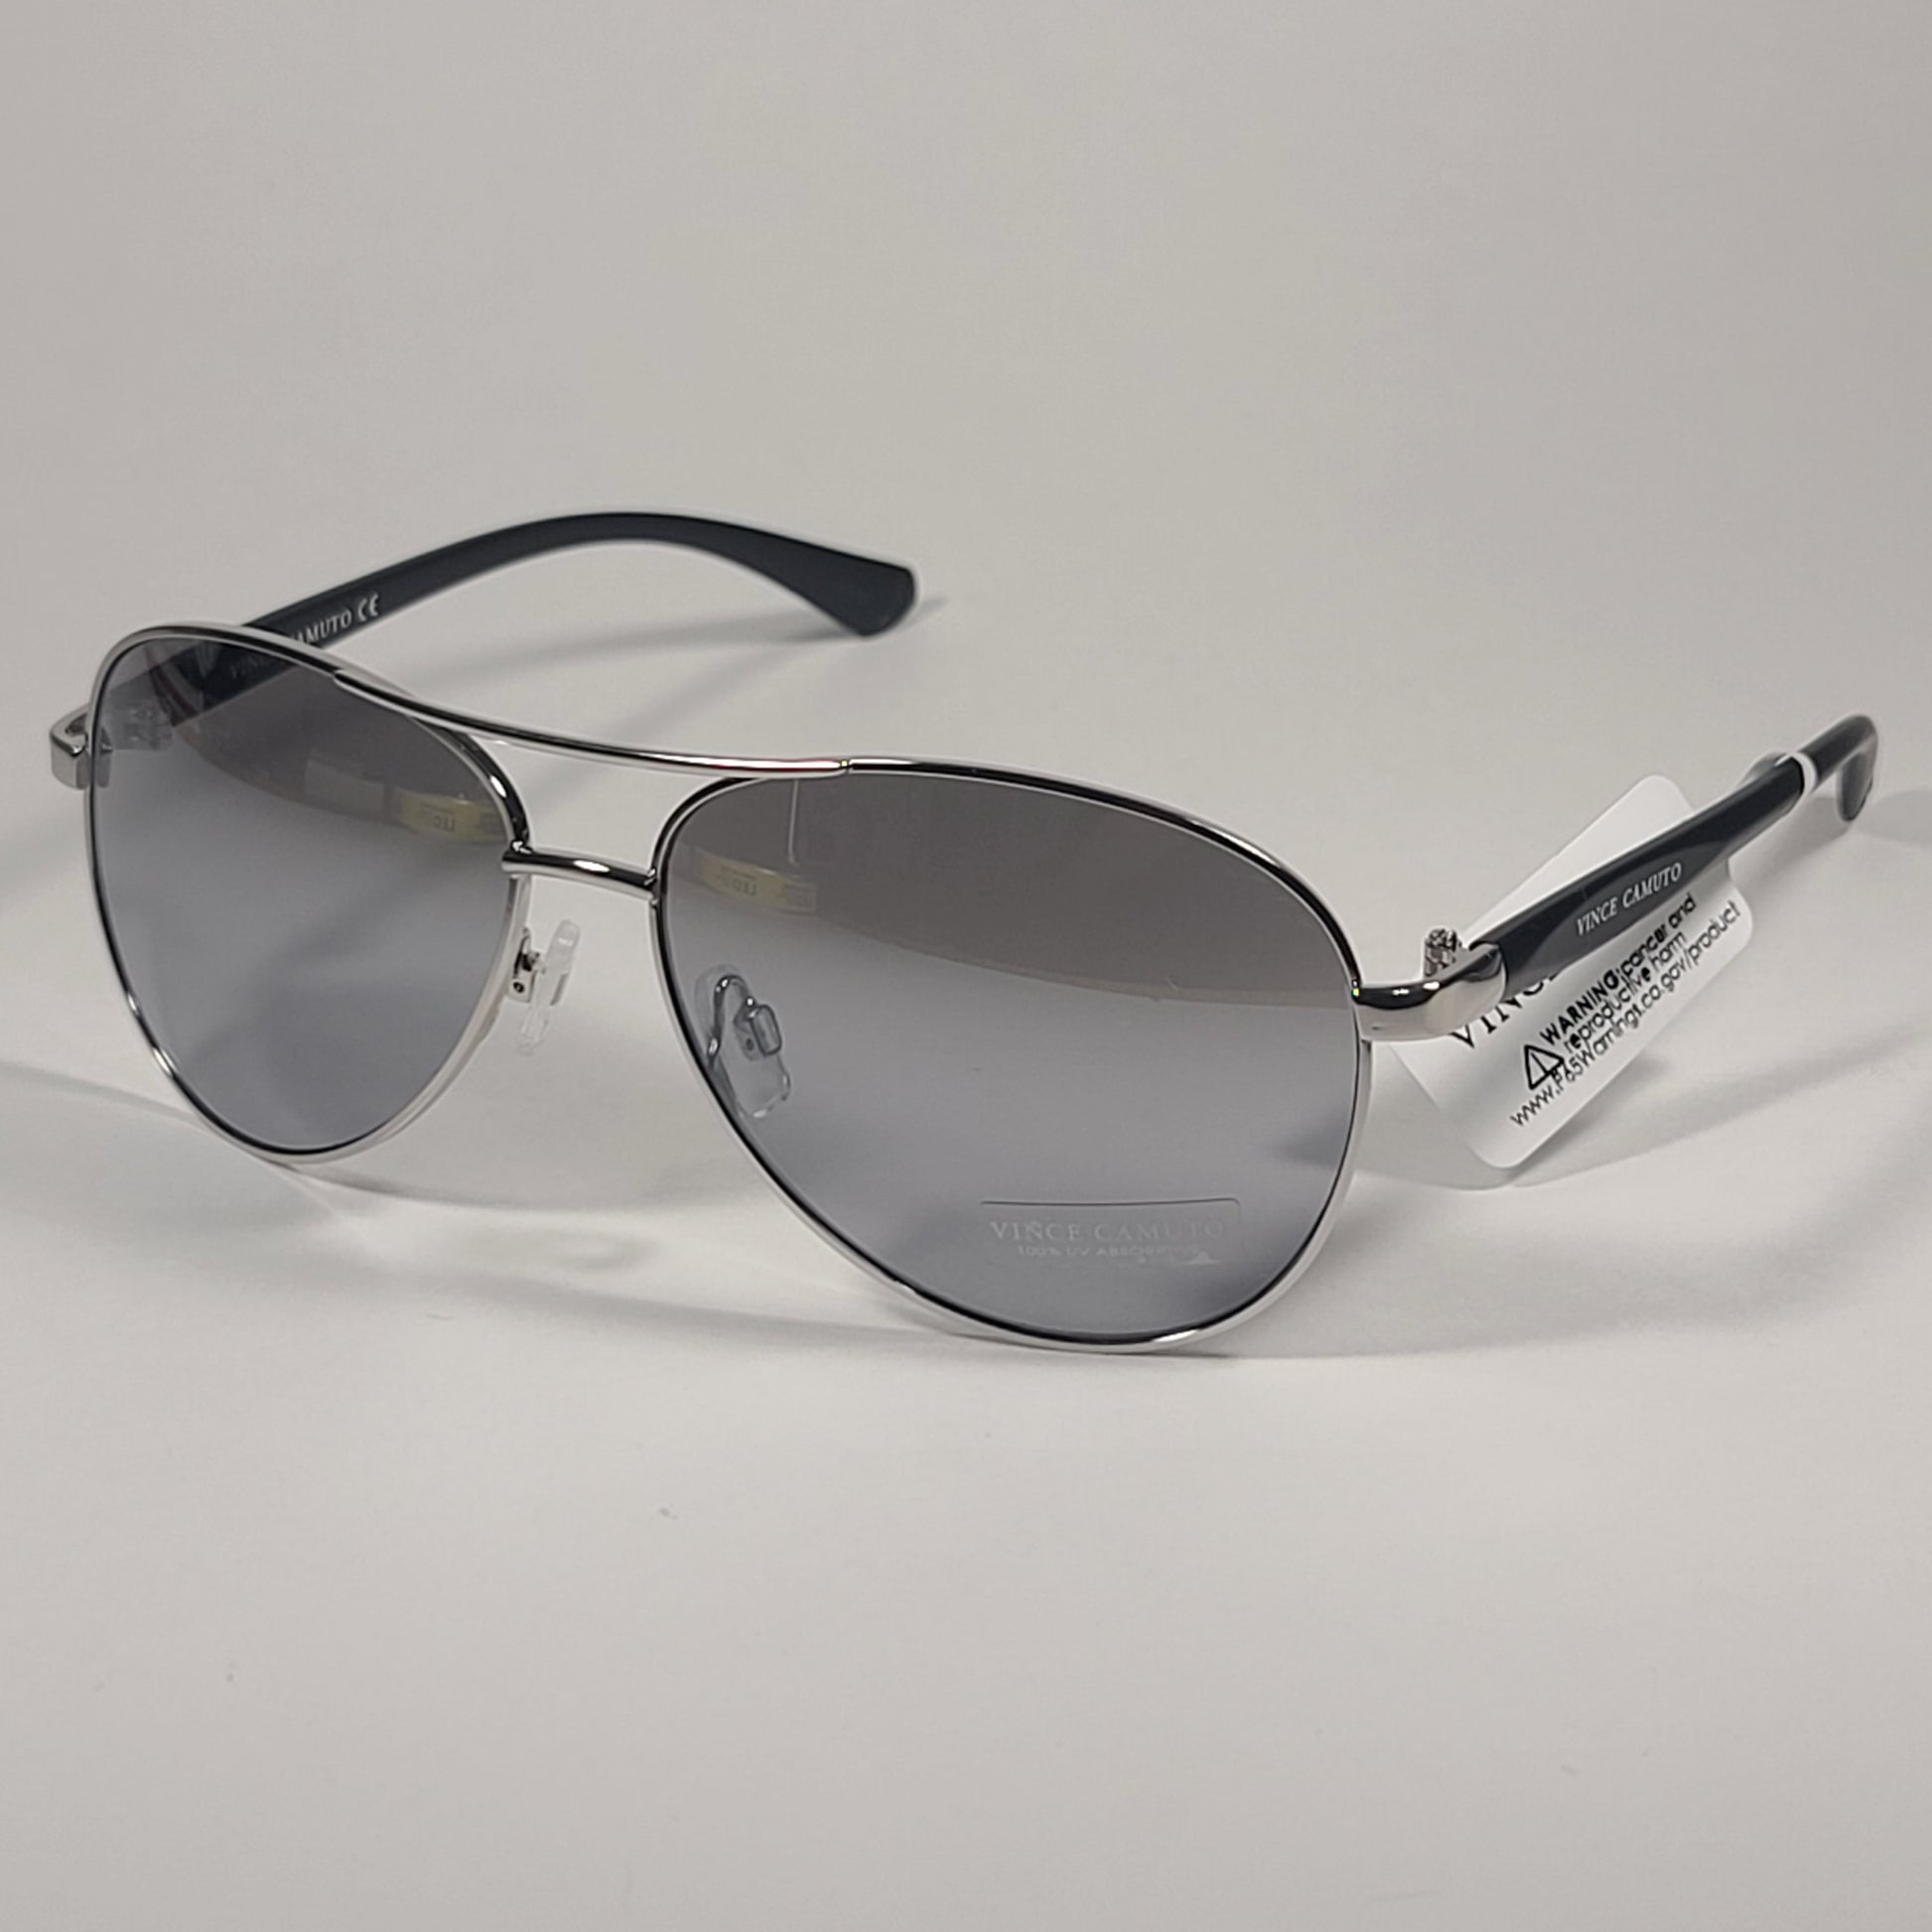 Vince Camuto VC593 SLVOX Aviator Sunglasses Silver Black Frame Silver Mirror Lens - Sunglasses